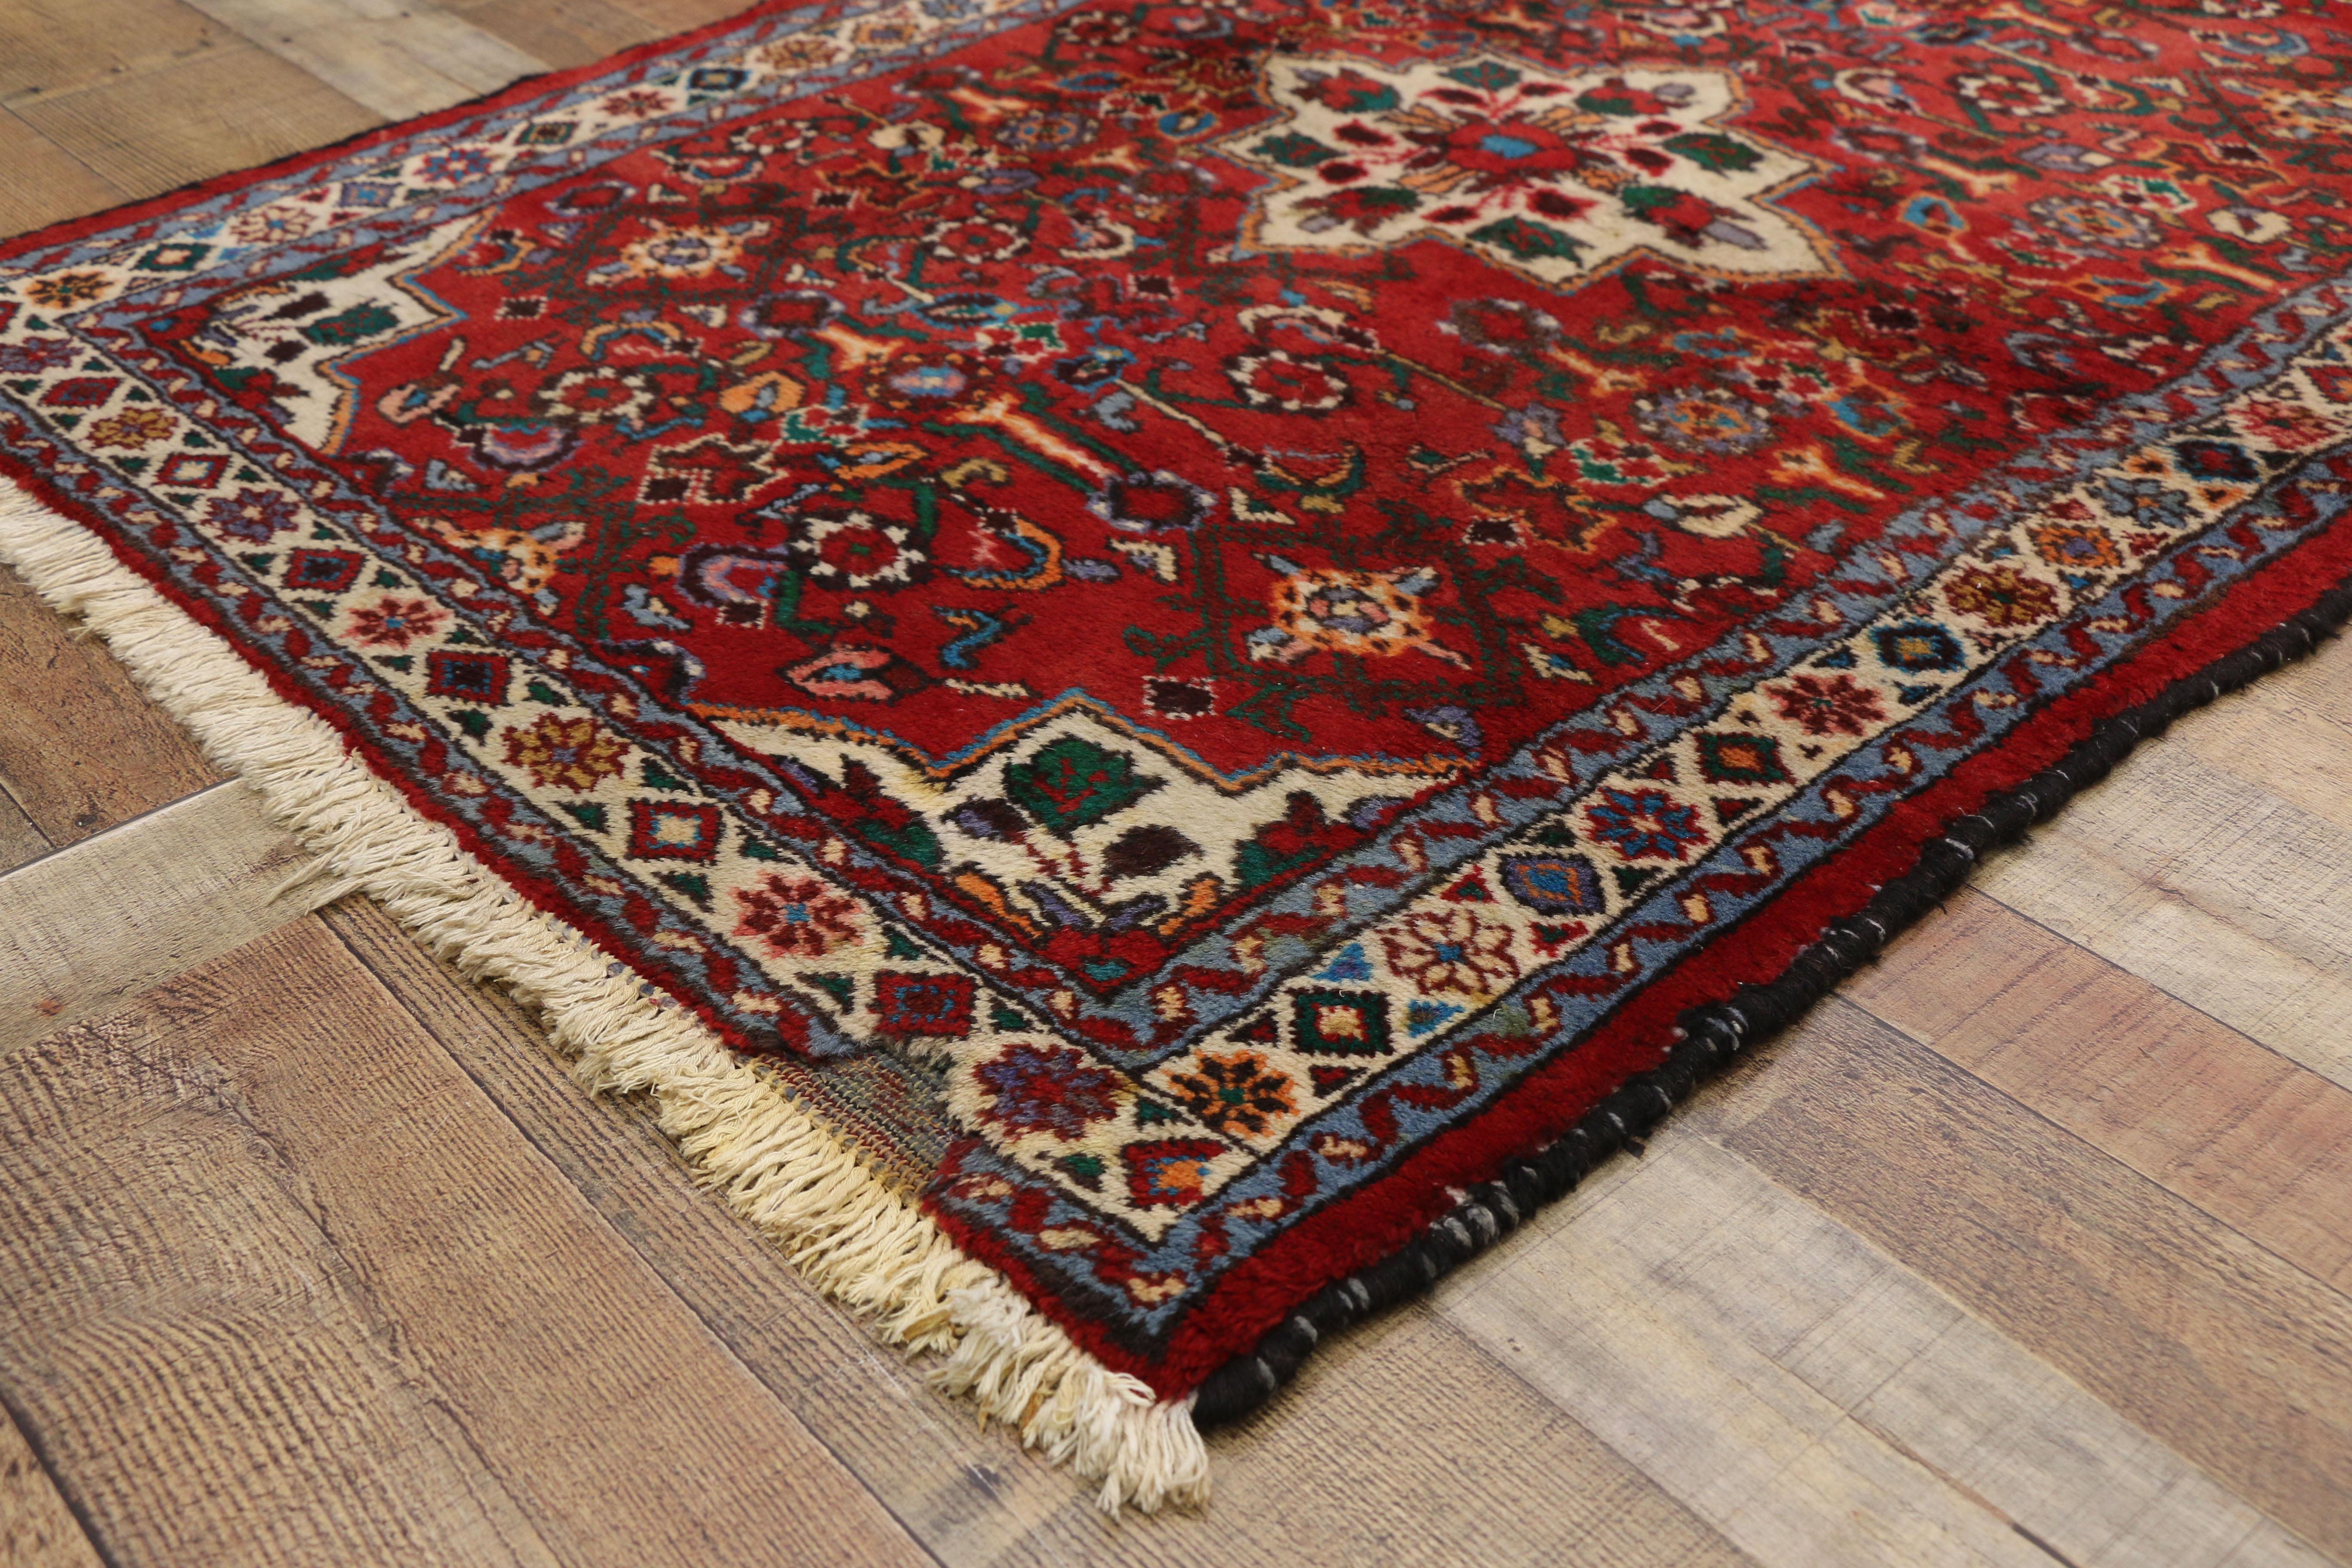 Vintage Persian Borchelou Hamadan Rug, Entry or Foyer Rug In Good Condition For Sale In Dallas, TX